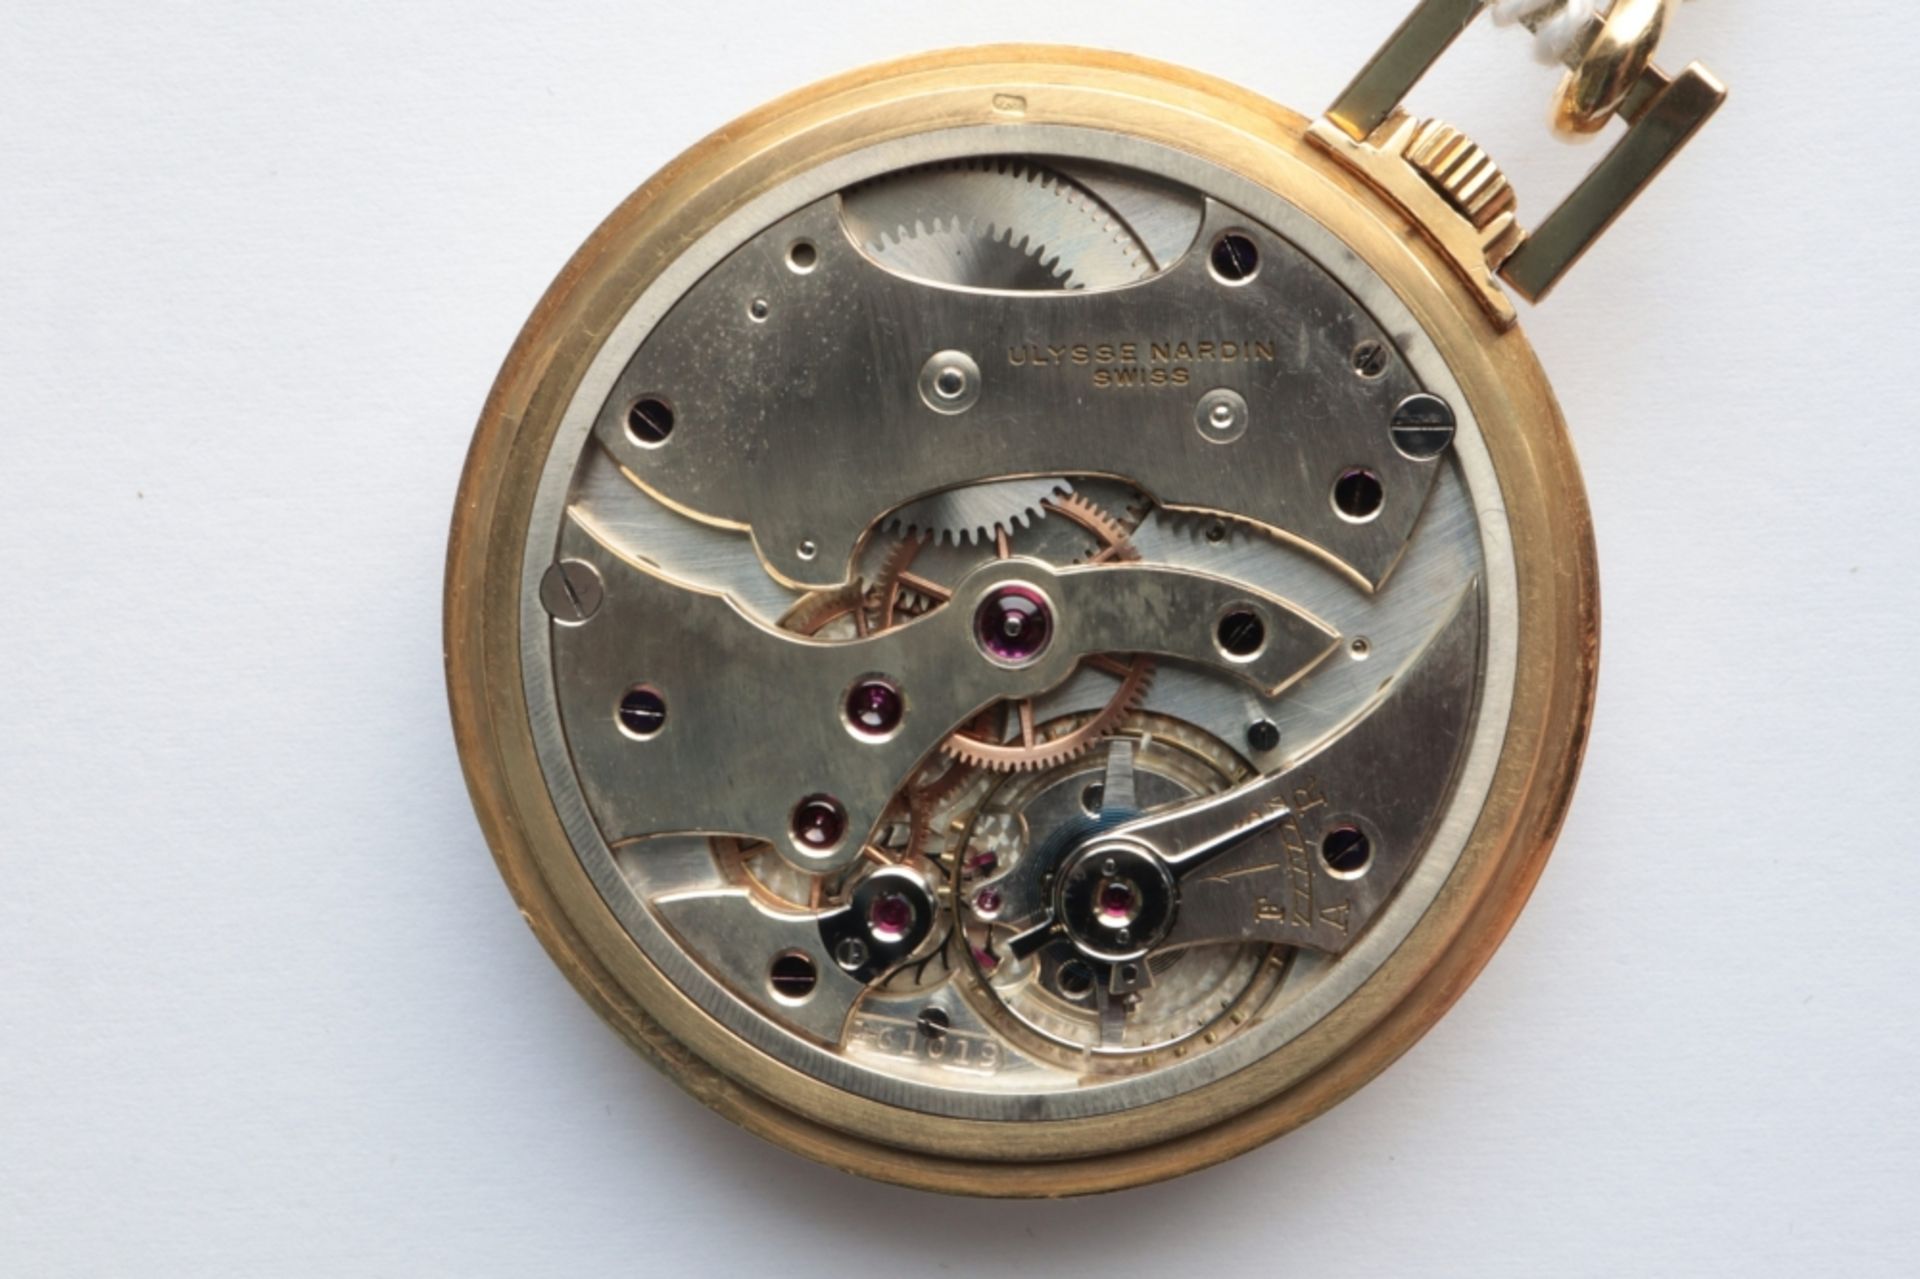 Ulysse Nardin Ulysse Nardin chronometer watch SWITZERLAND 18k gold Ulysse Nardin pocket watch. - Bild 3 aus 3